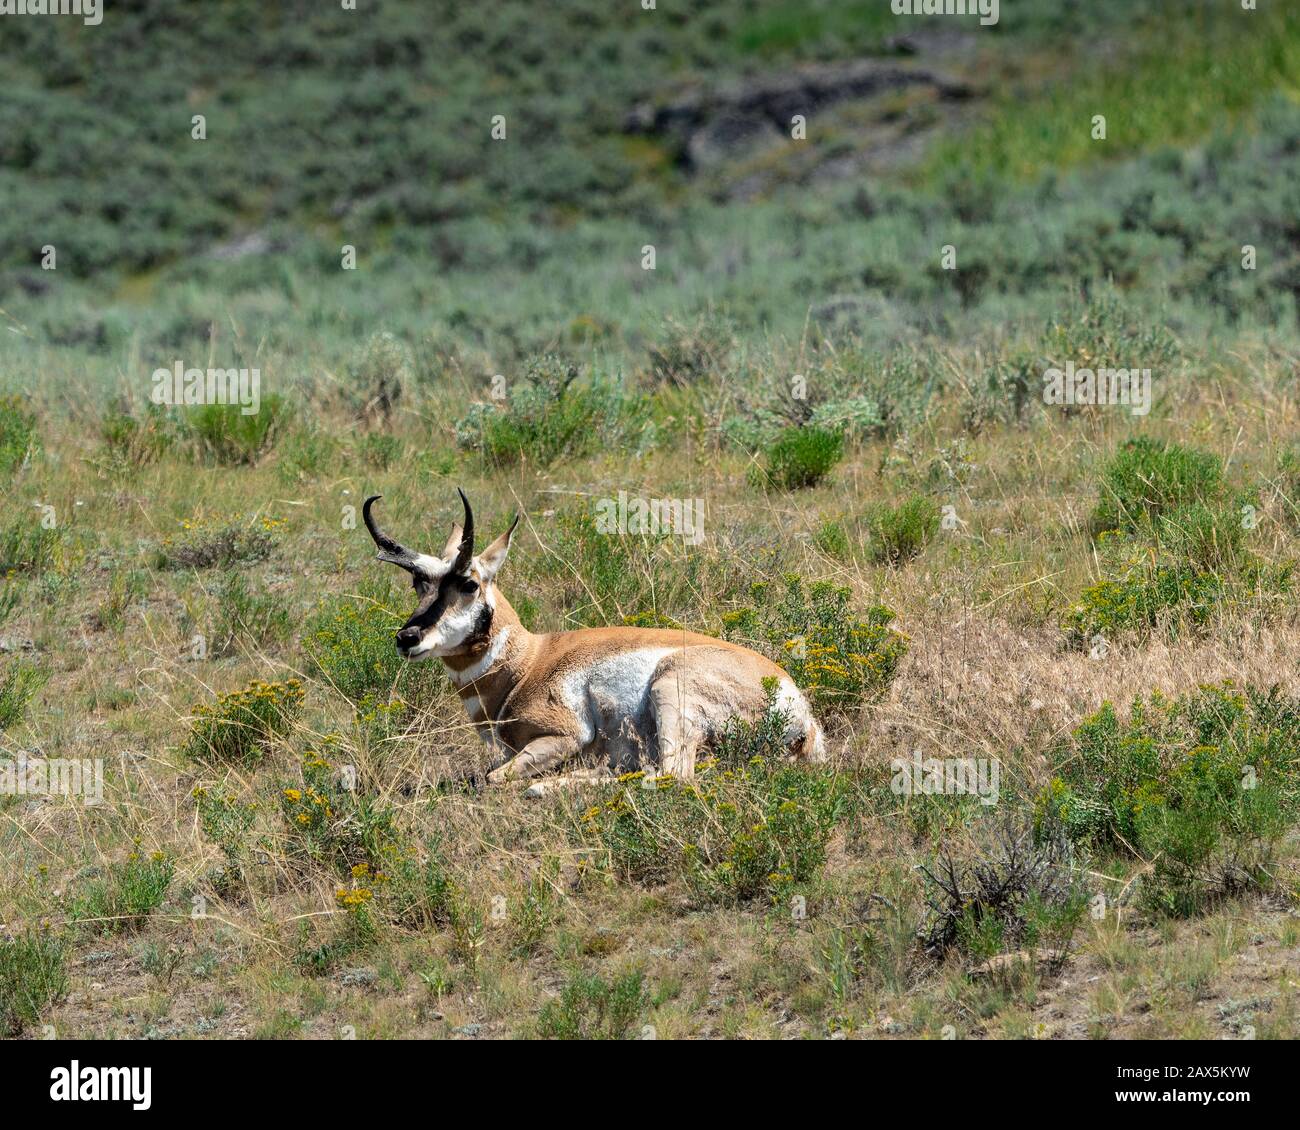 Pronghorn lying in grassy field. Stock Photo